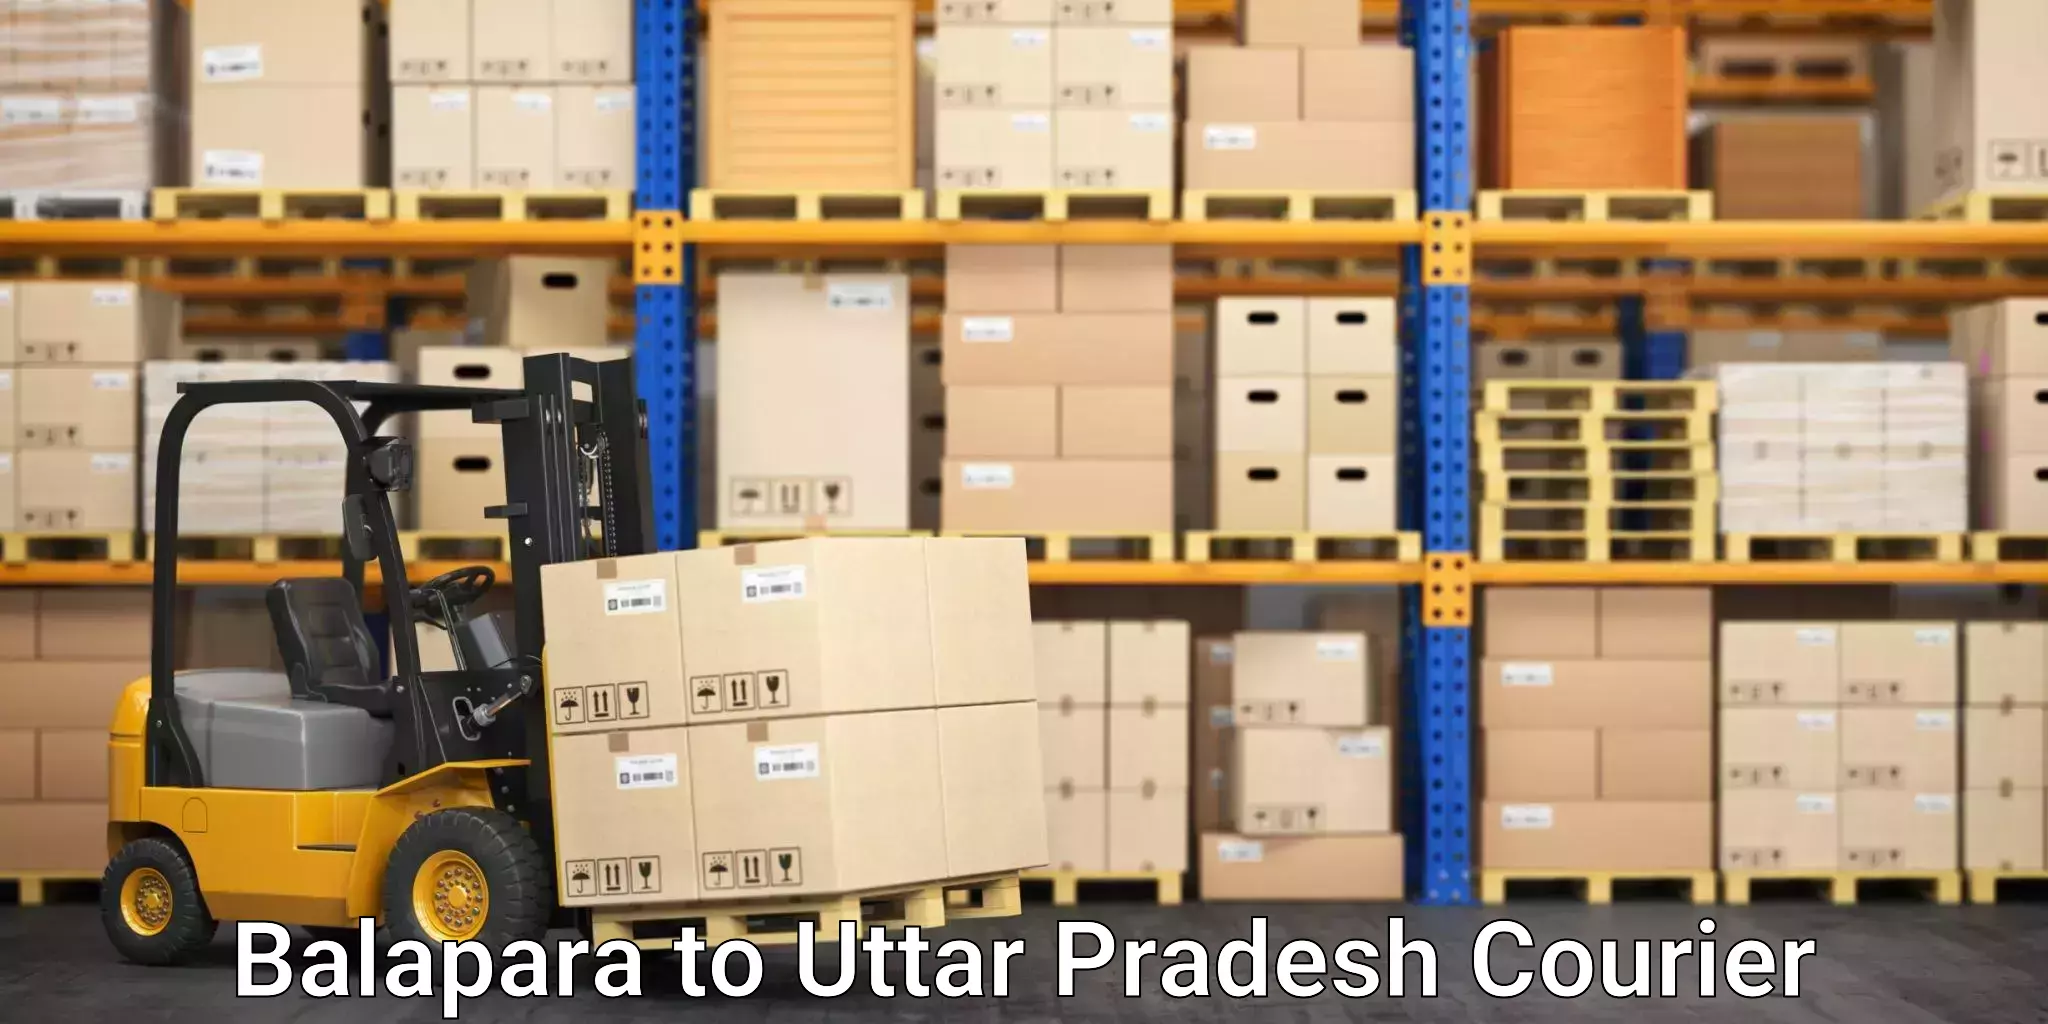 Express delivery network Balapara to Uttar Pradesh